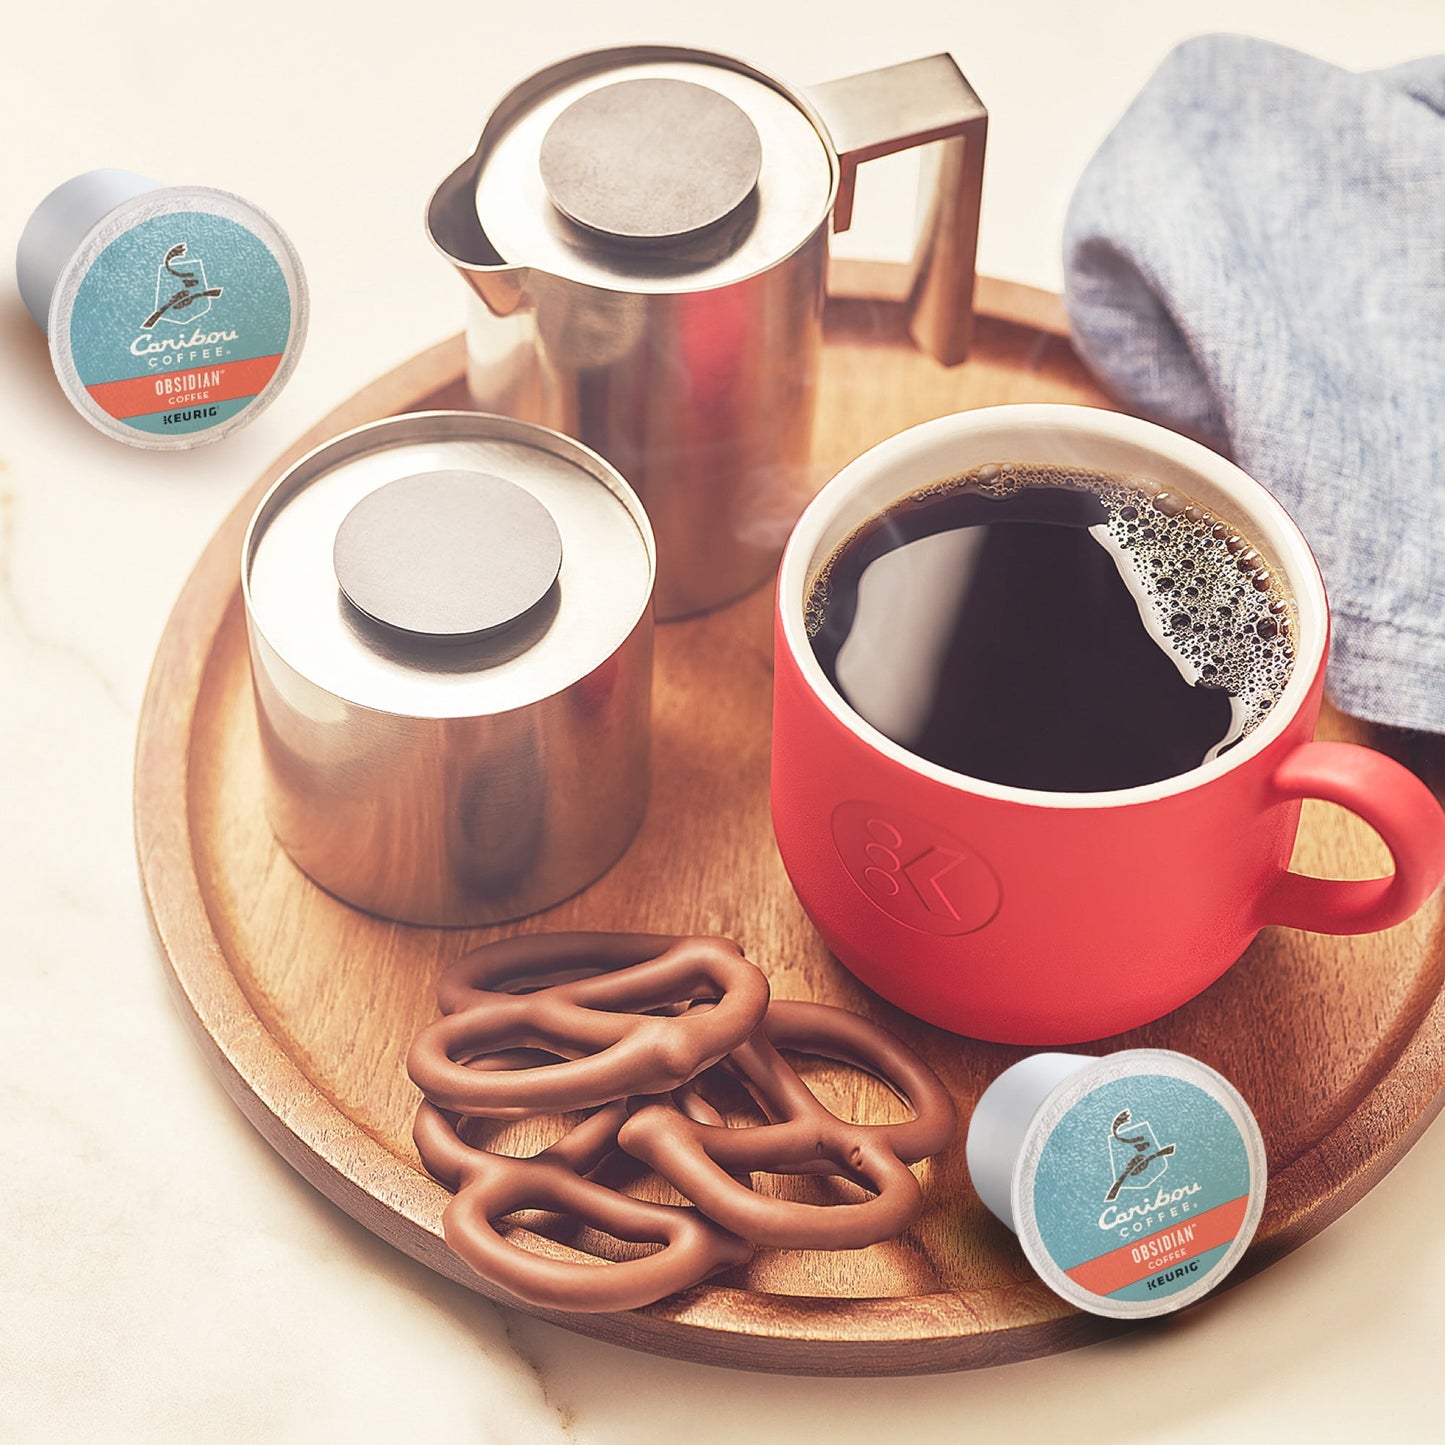 Caribou Coffee Obsidian Keurig Single-Serve K-Cup Pod,  Medium Roast C